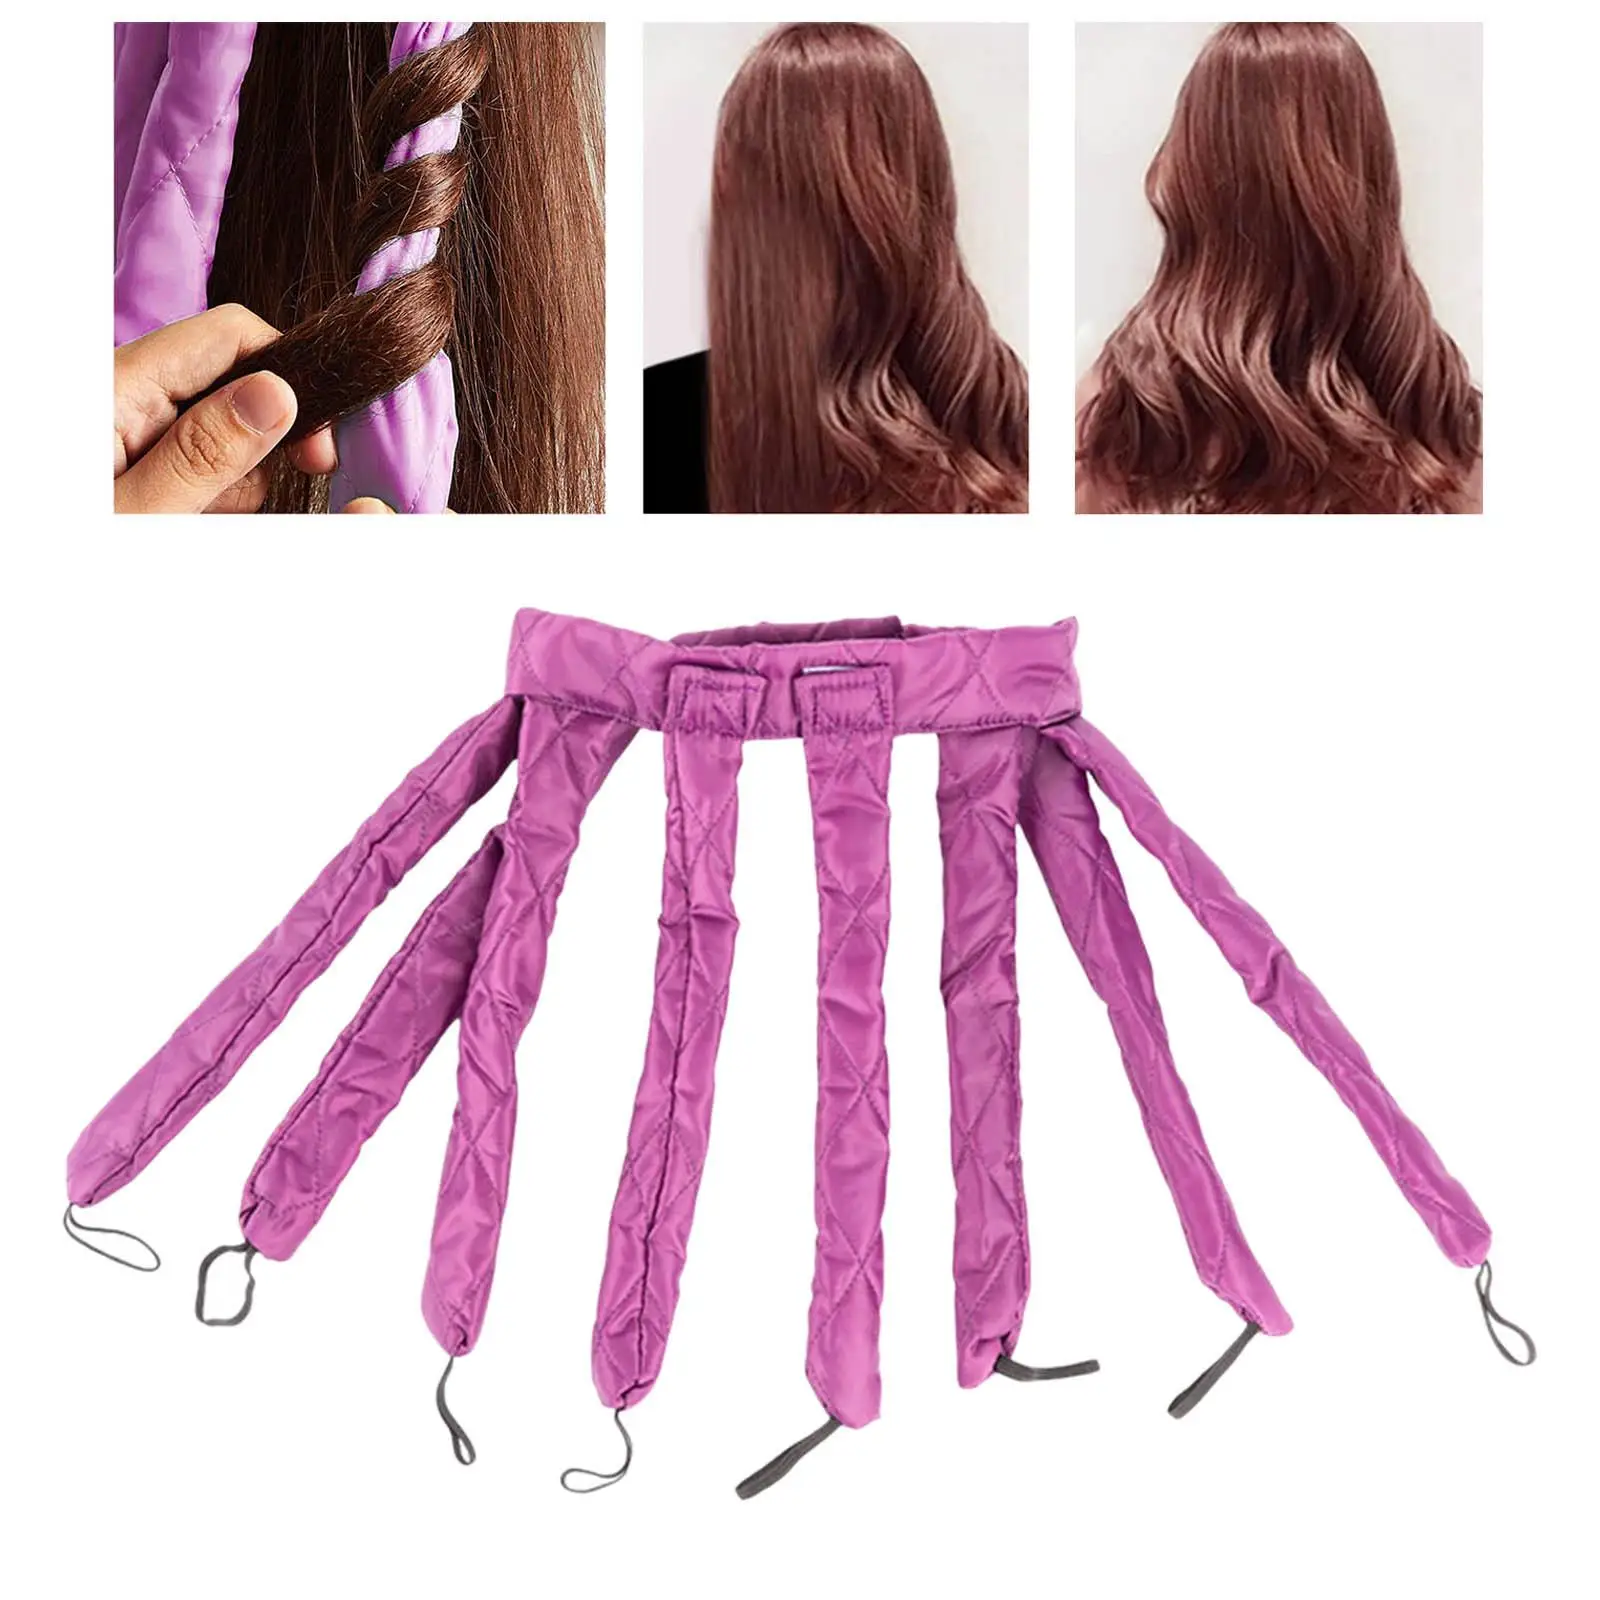 Heatless Hair Curler Hair Styling Tool Sleep Overnight Curls No Heat Curling Rod Headband Wave Hair Curler Natural Curls